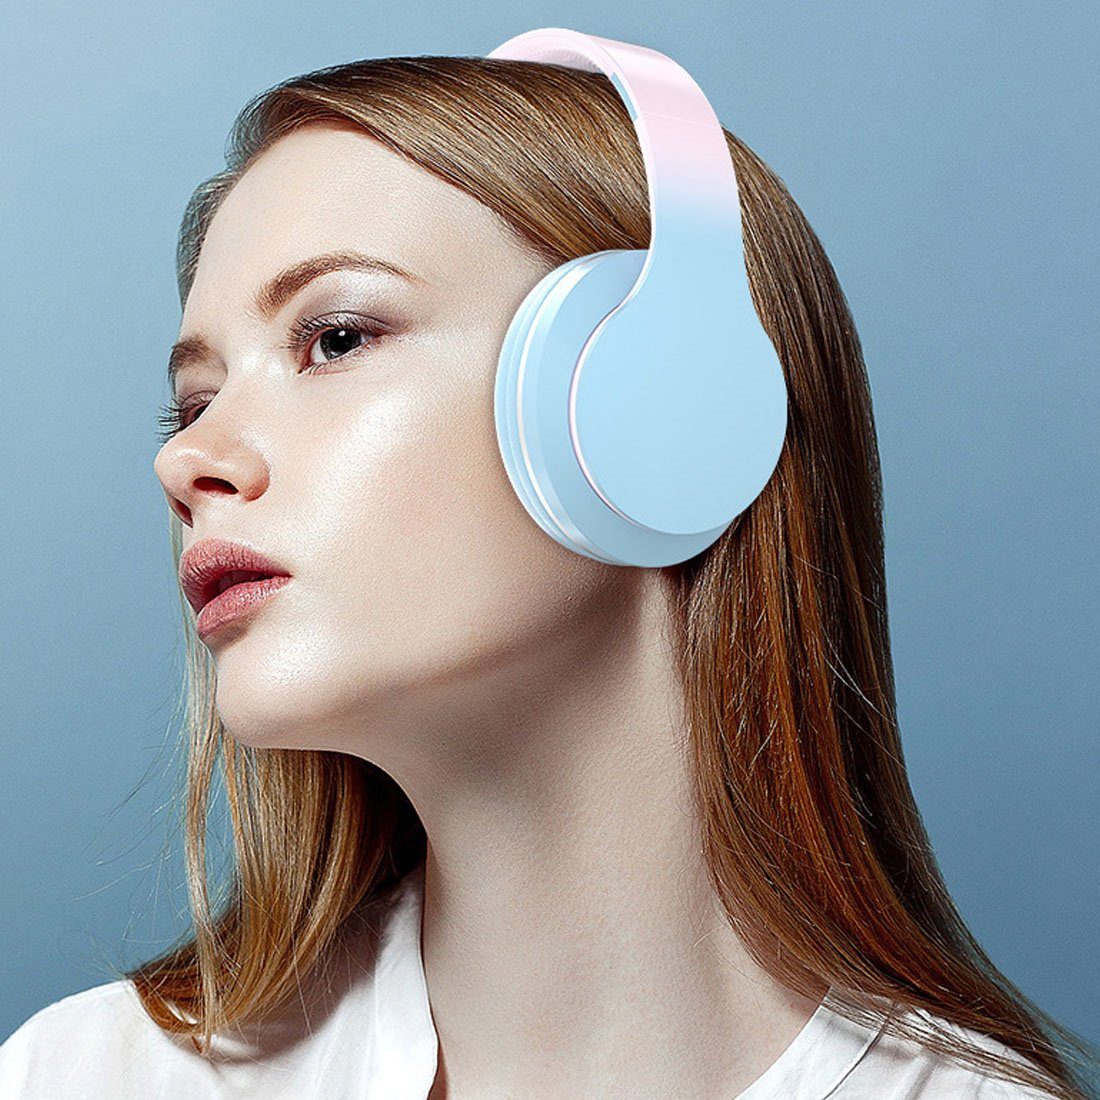 DÖRÖY Drahtloses Bluetooth-Headset mit Farbverlauf, Rosa Headset Bluetooth-Kopfhörer Gaming-Headset